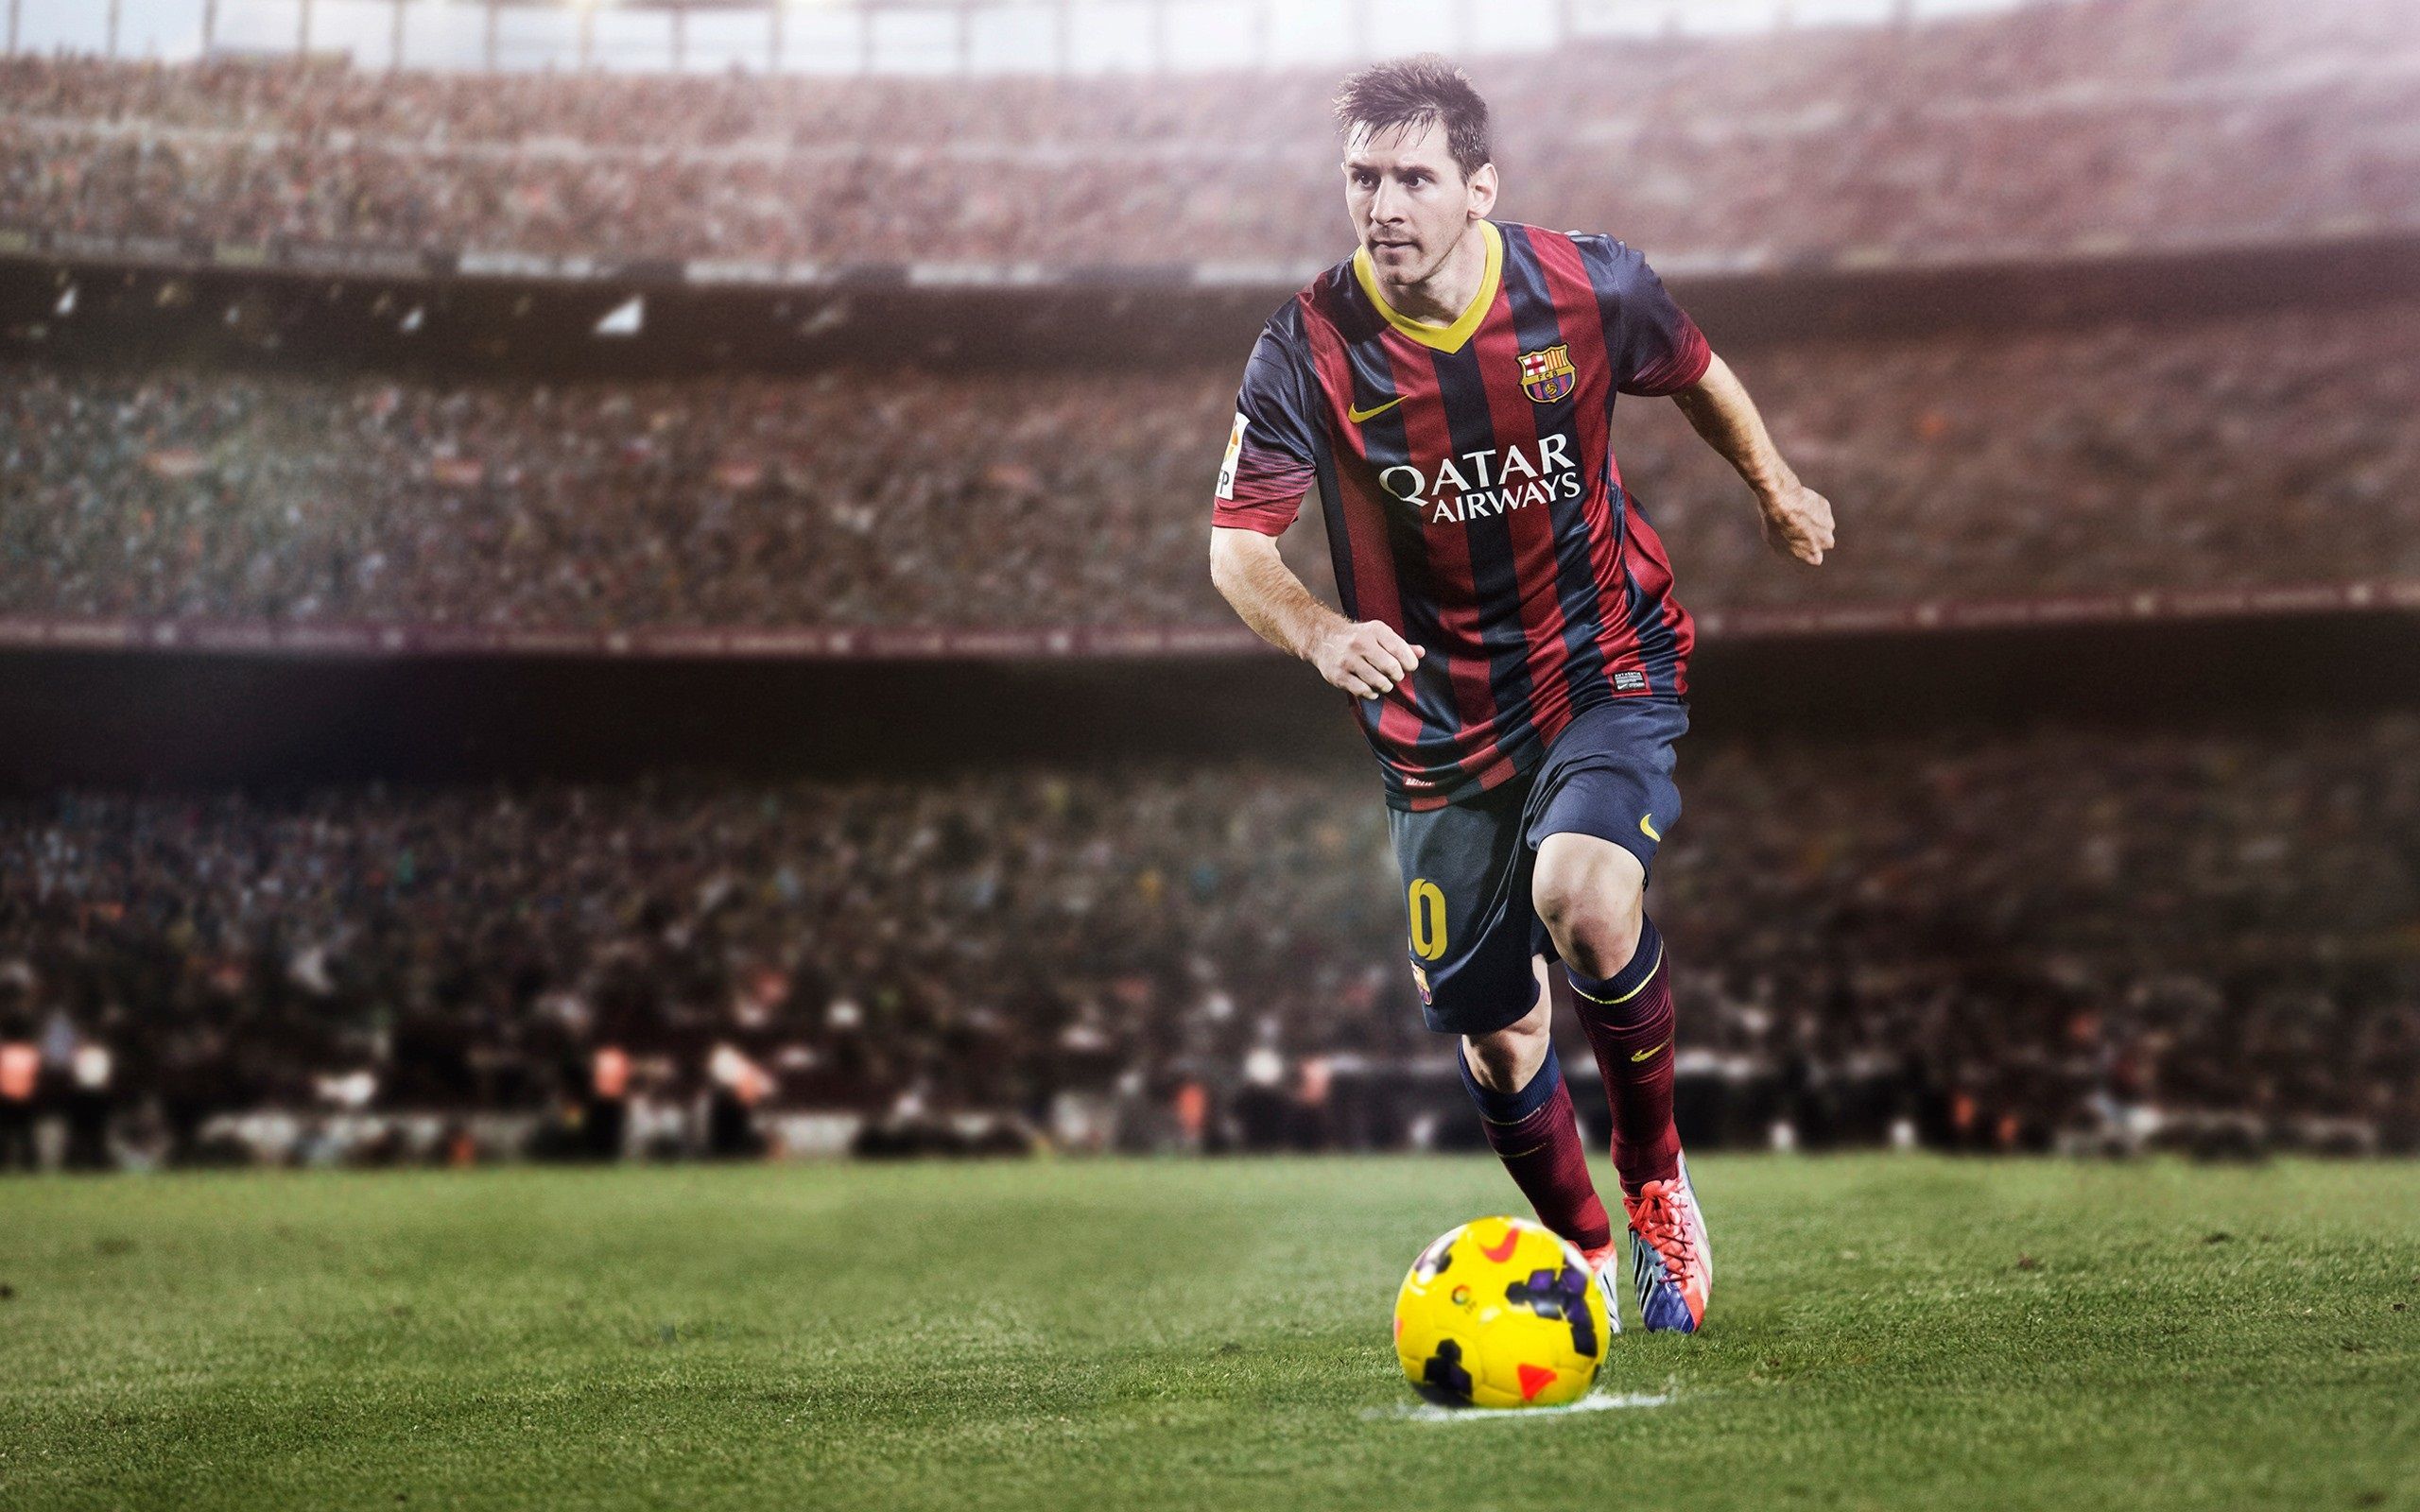 Lionel Messi Kicking Football - 2560x1600 Wallpaper - teahub.io